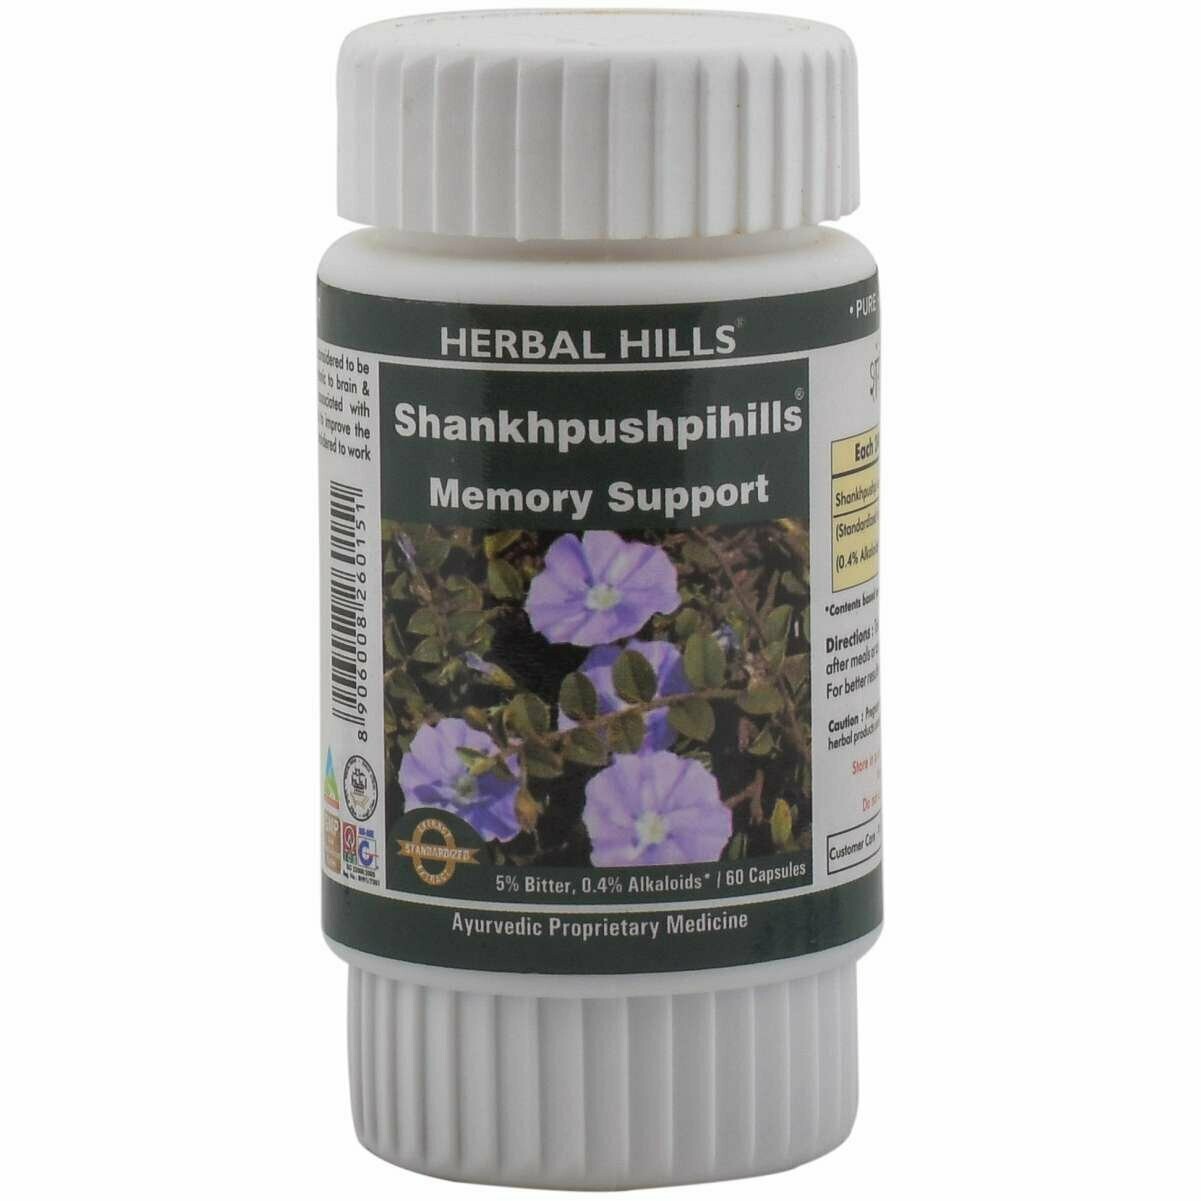 Herbal Hills Shankhpushpihills Memory Support 60Capsules